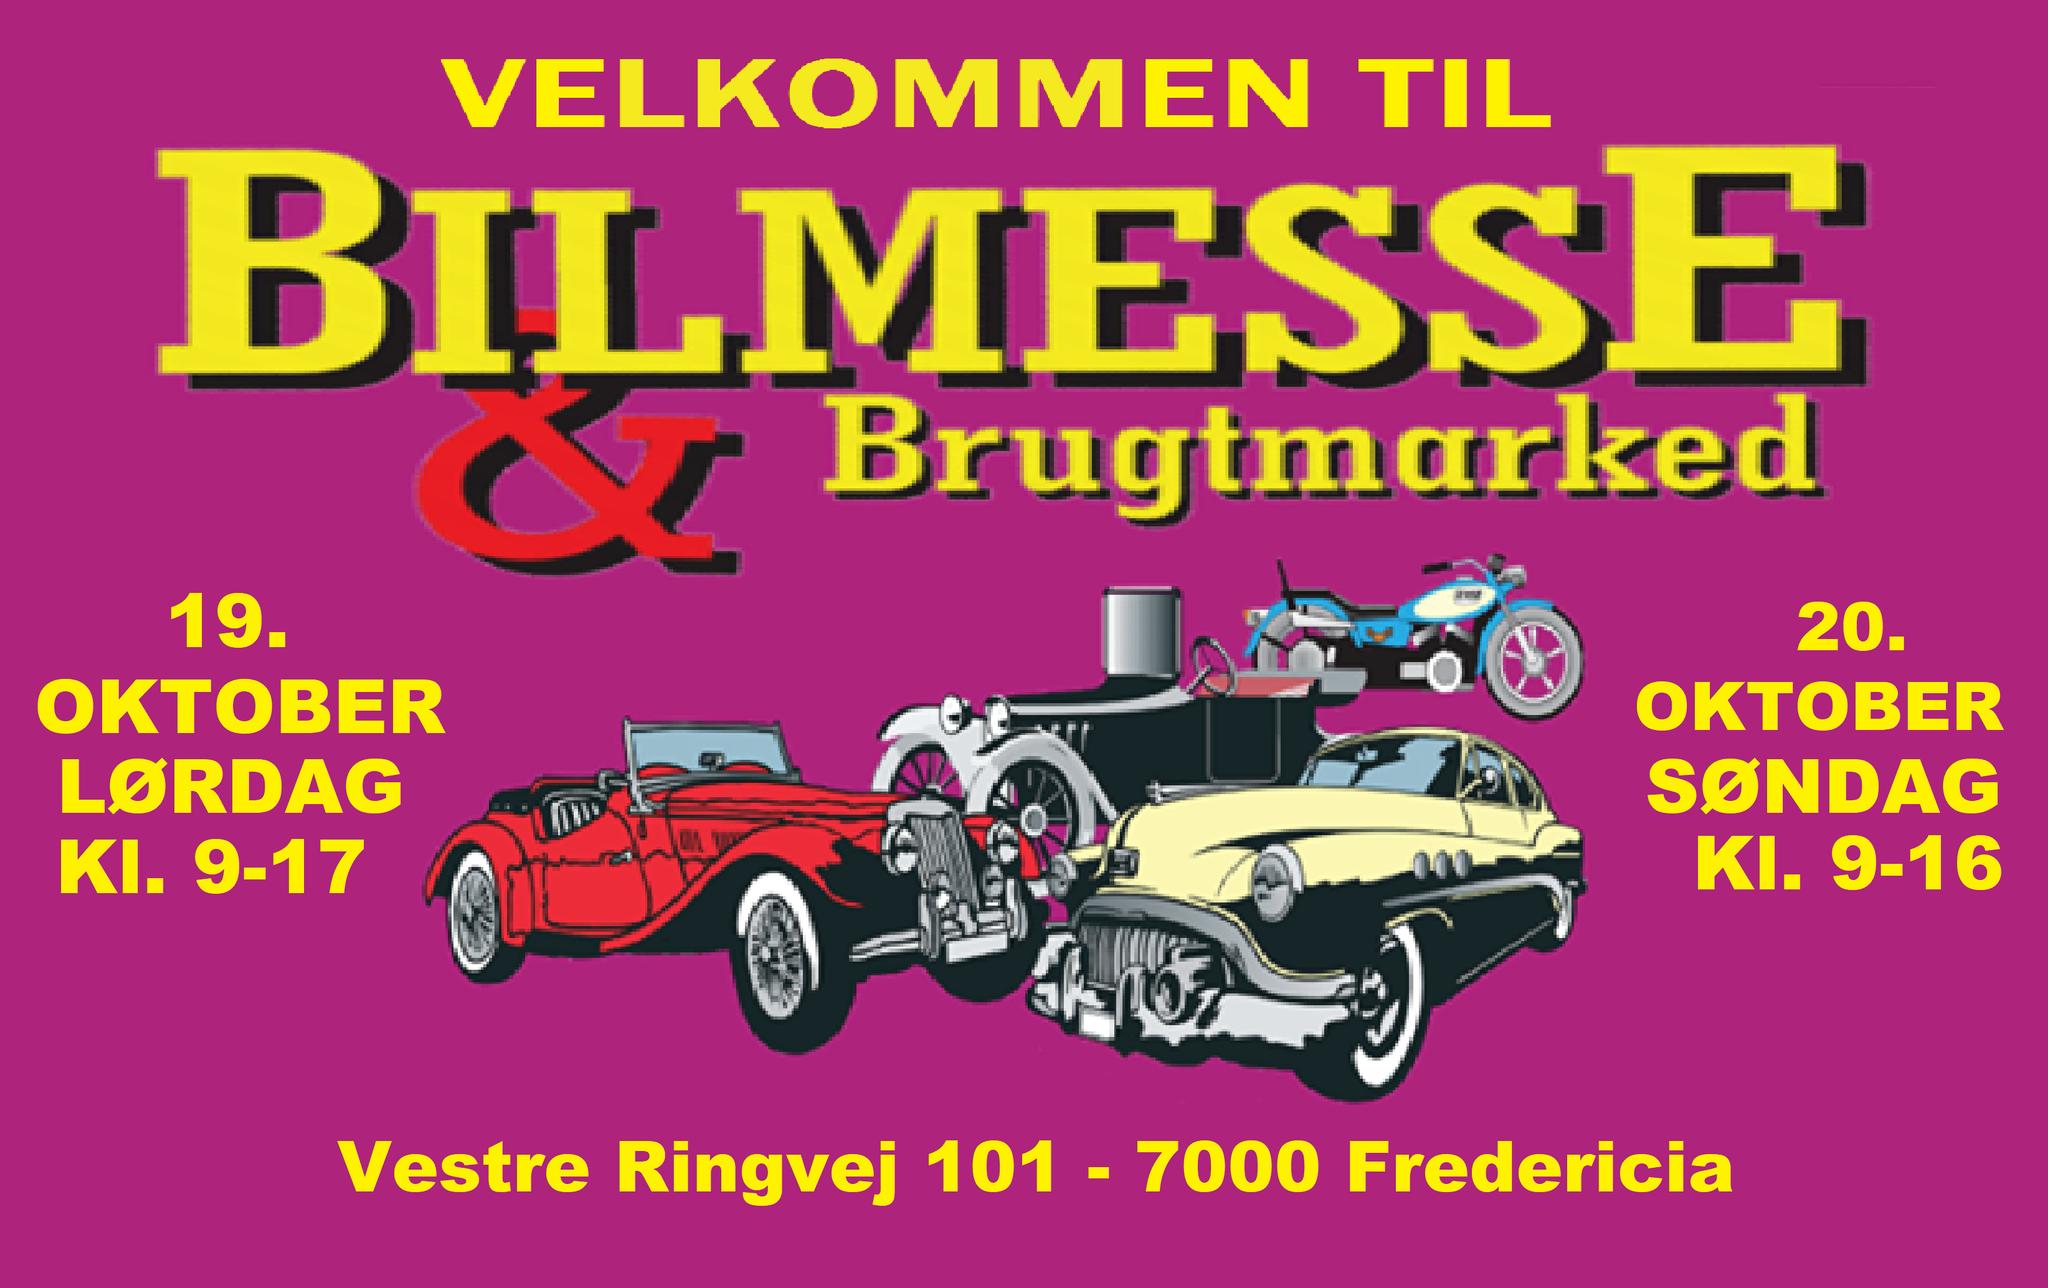 Bilmesse & Brugtmarked Fredericia - Racelens